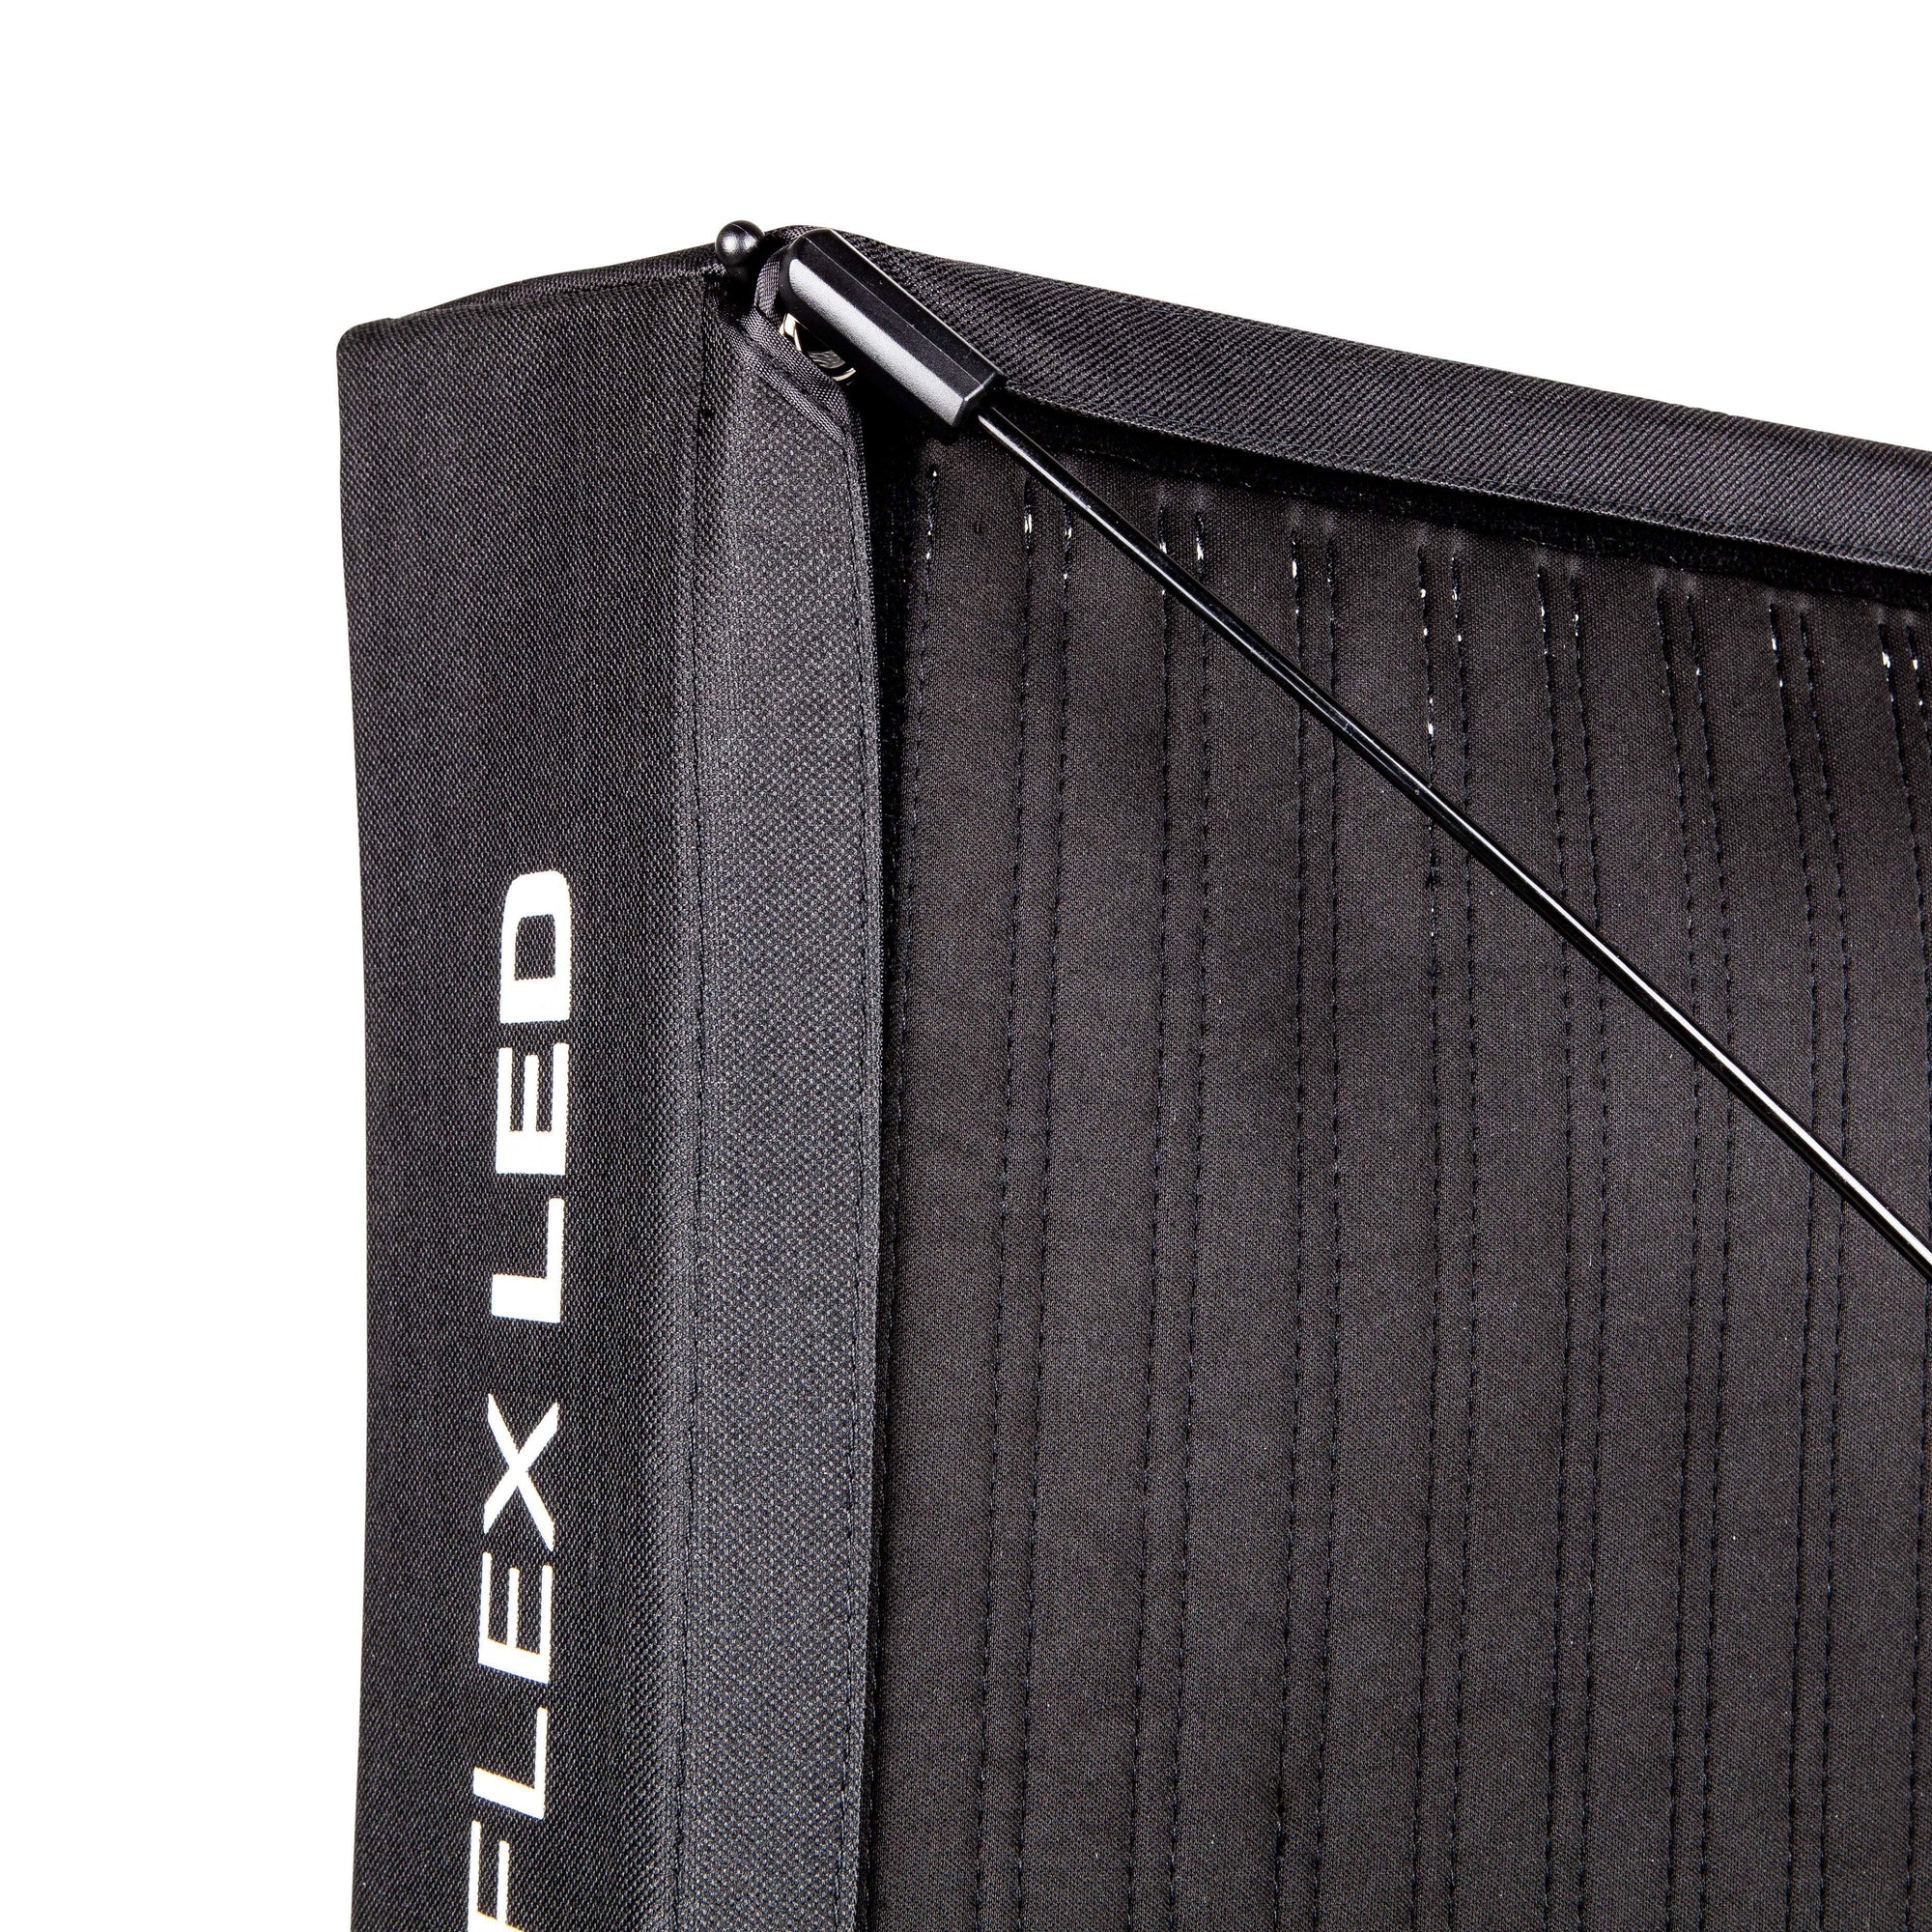 Softbox for 2x2 Flex 150-SQ LED Panel - Strobepro Studio Lighting